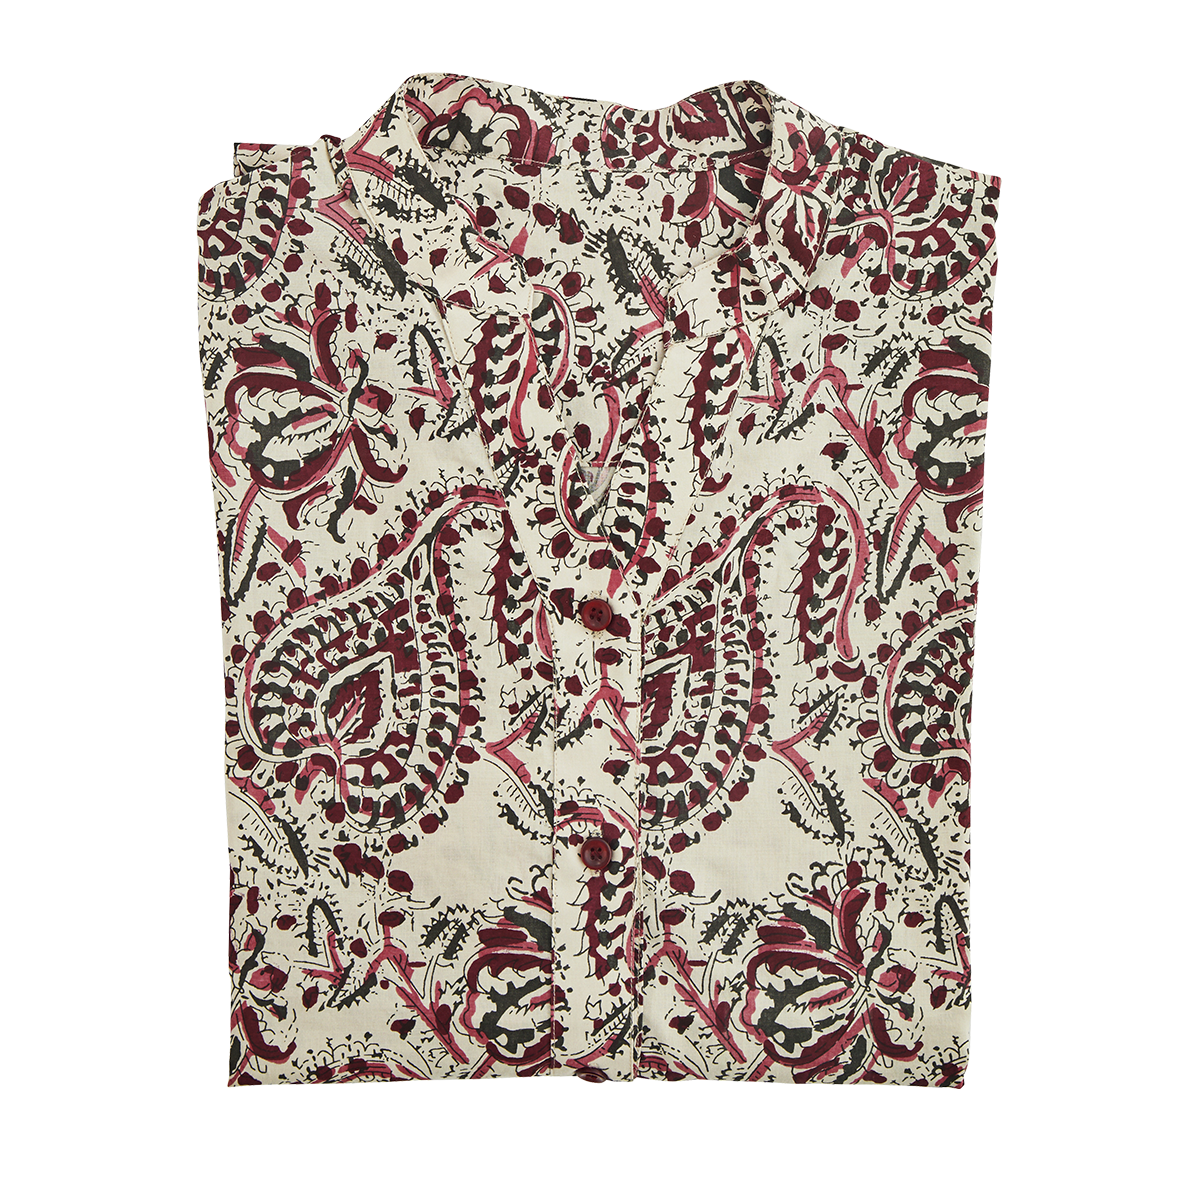 Printed cotton tunic